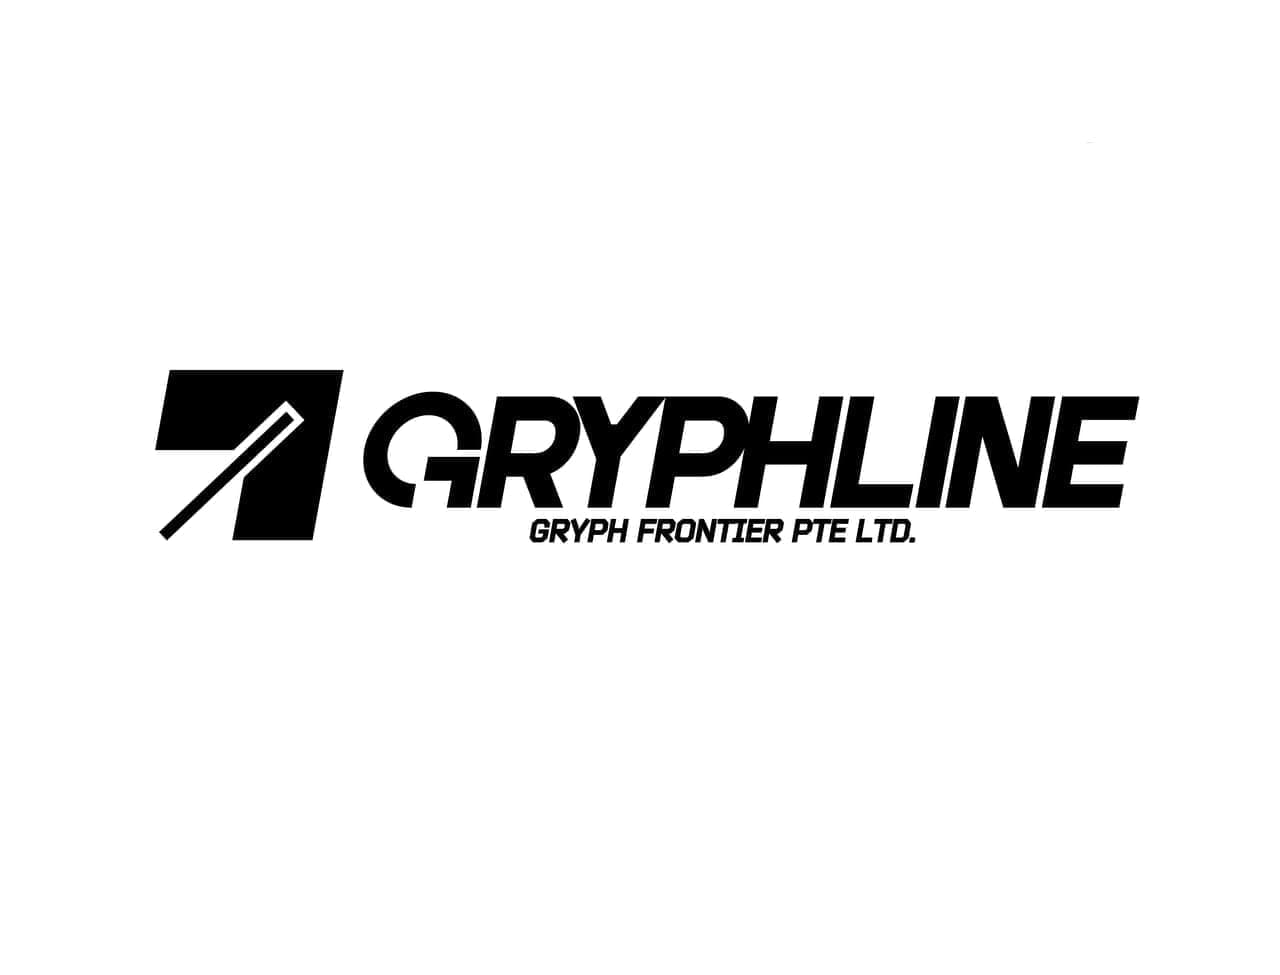 Hypergryphの新パブリッシャーブランド「GRYPHLINE」設立_002